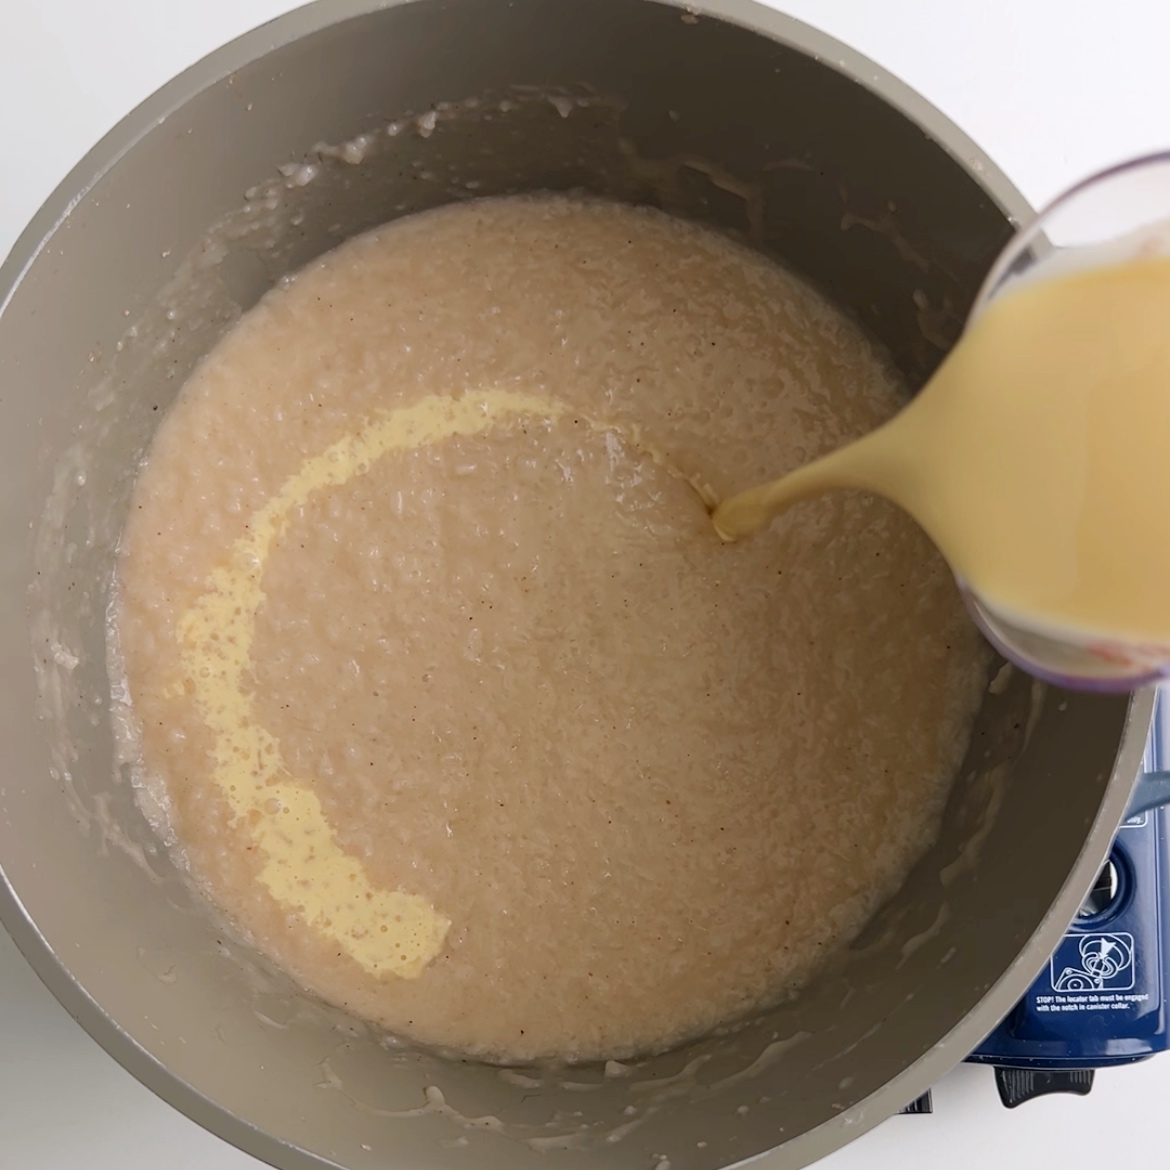 Adding evaporated milk to the finished rice porridge